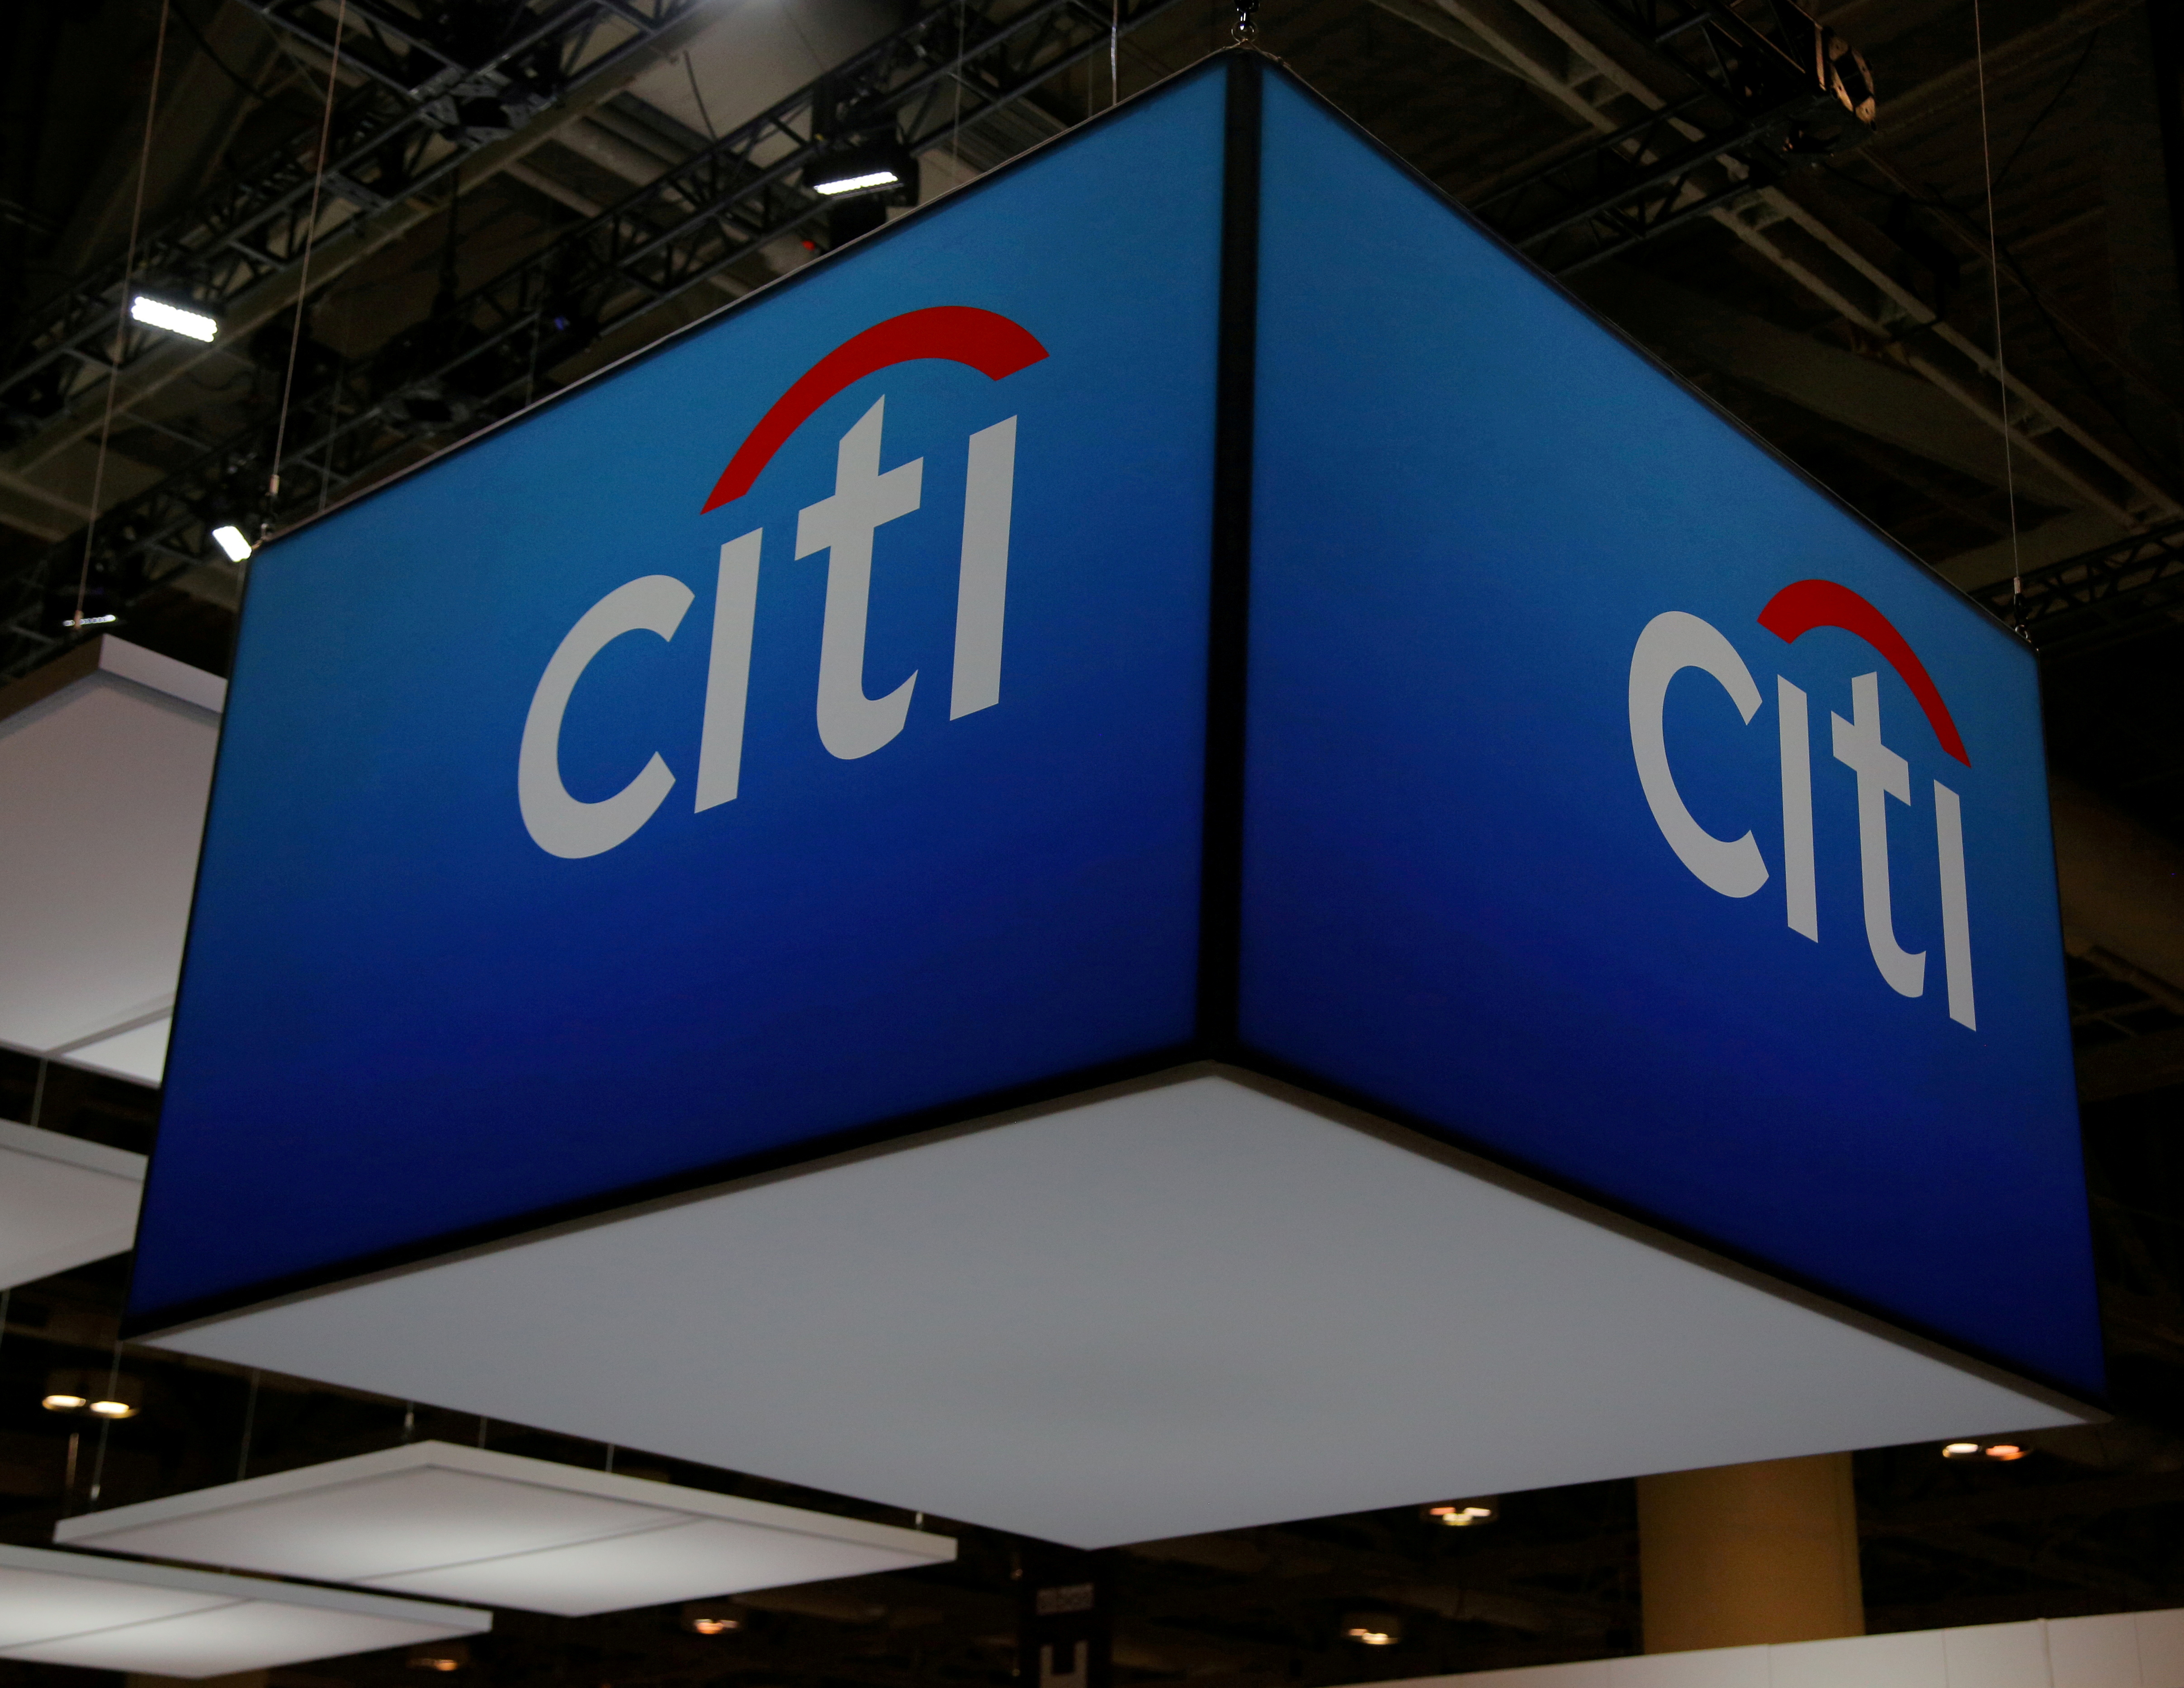 The Citigroup Inc (Citi) in Toronto, Ontario, Canada October 19, 2017. Picture taken October 19, 2017. REUTERS/Chris Helgren/File Photo